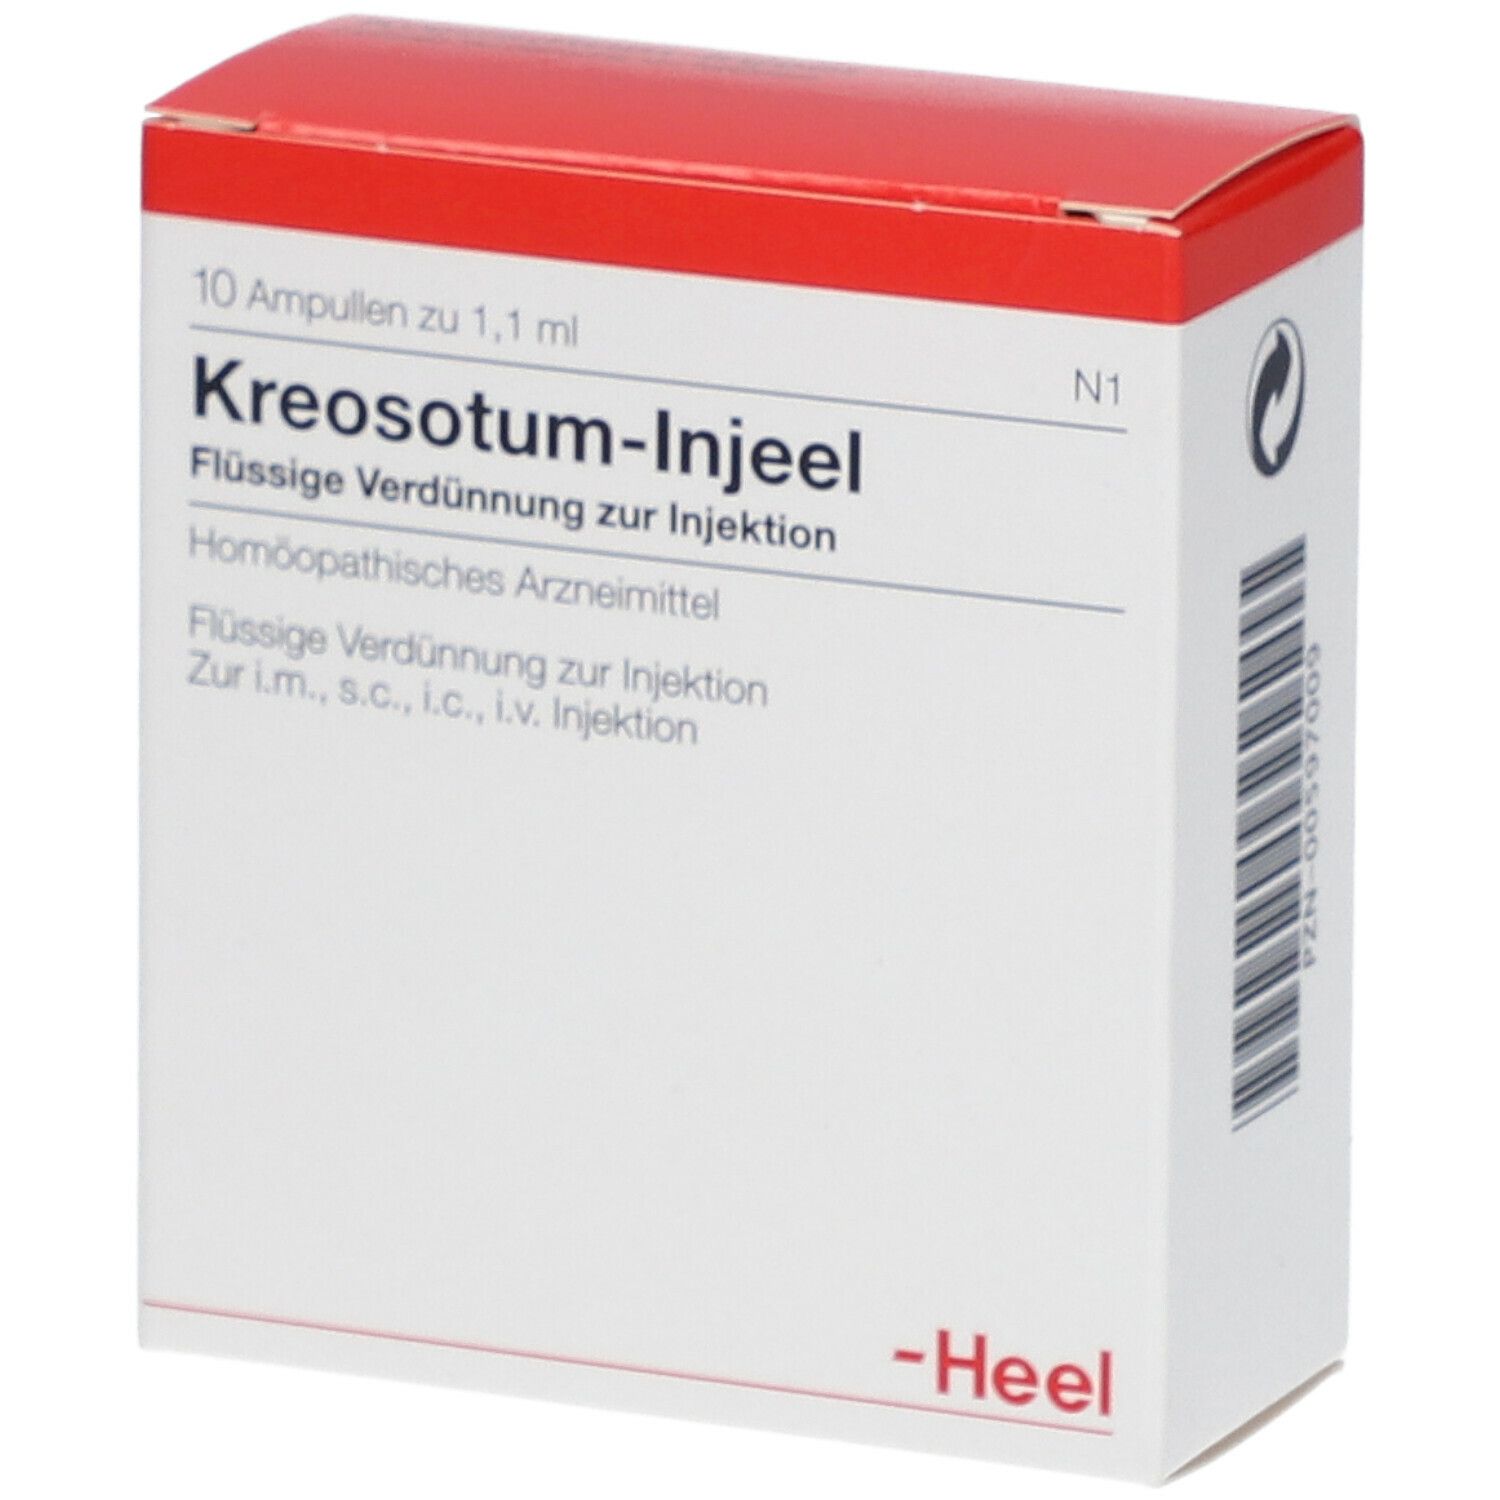 Kreosotum-Injeel® Ampullen